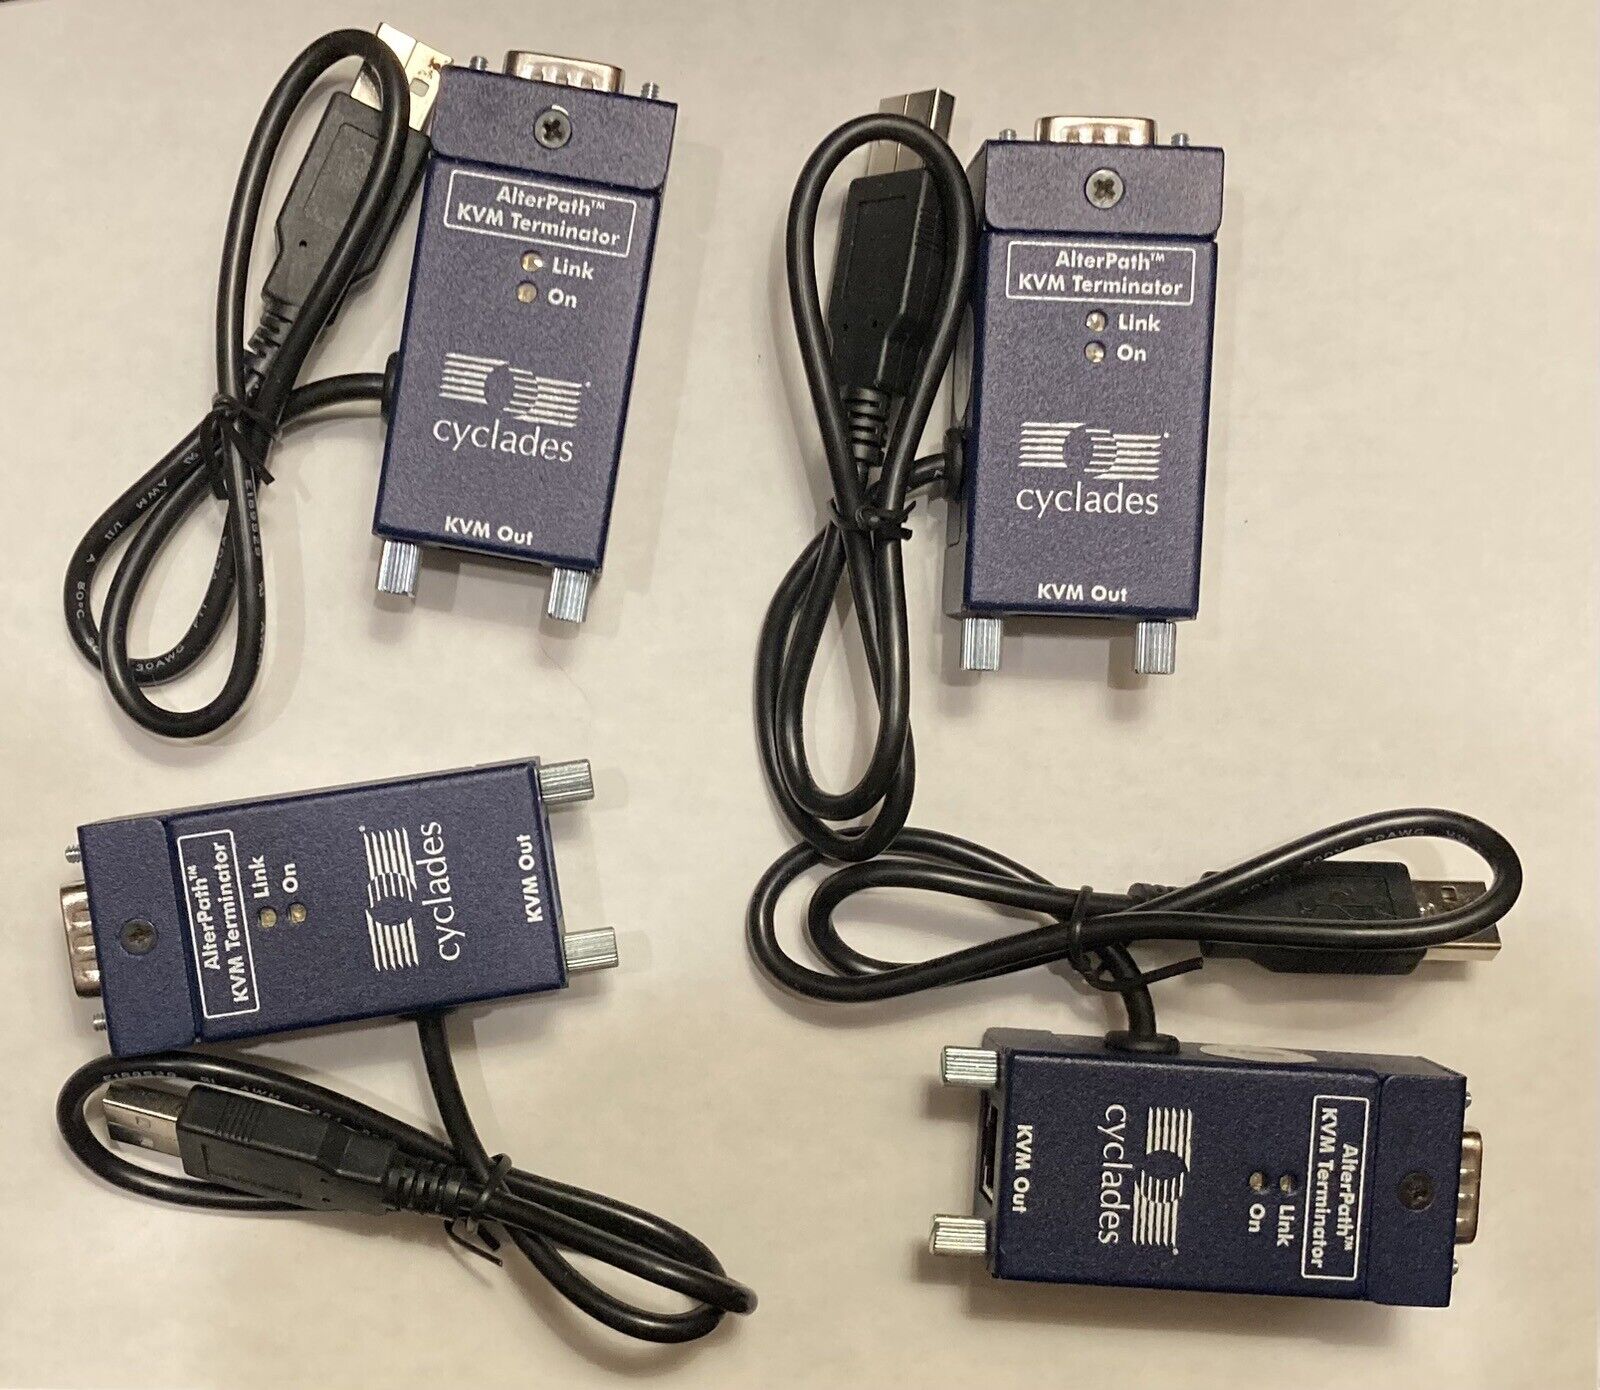 LOT OF 5 - Cyclades AlterPath KVM Terminator USB VGA RJ45 Switch Module Cable